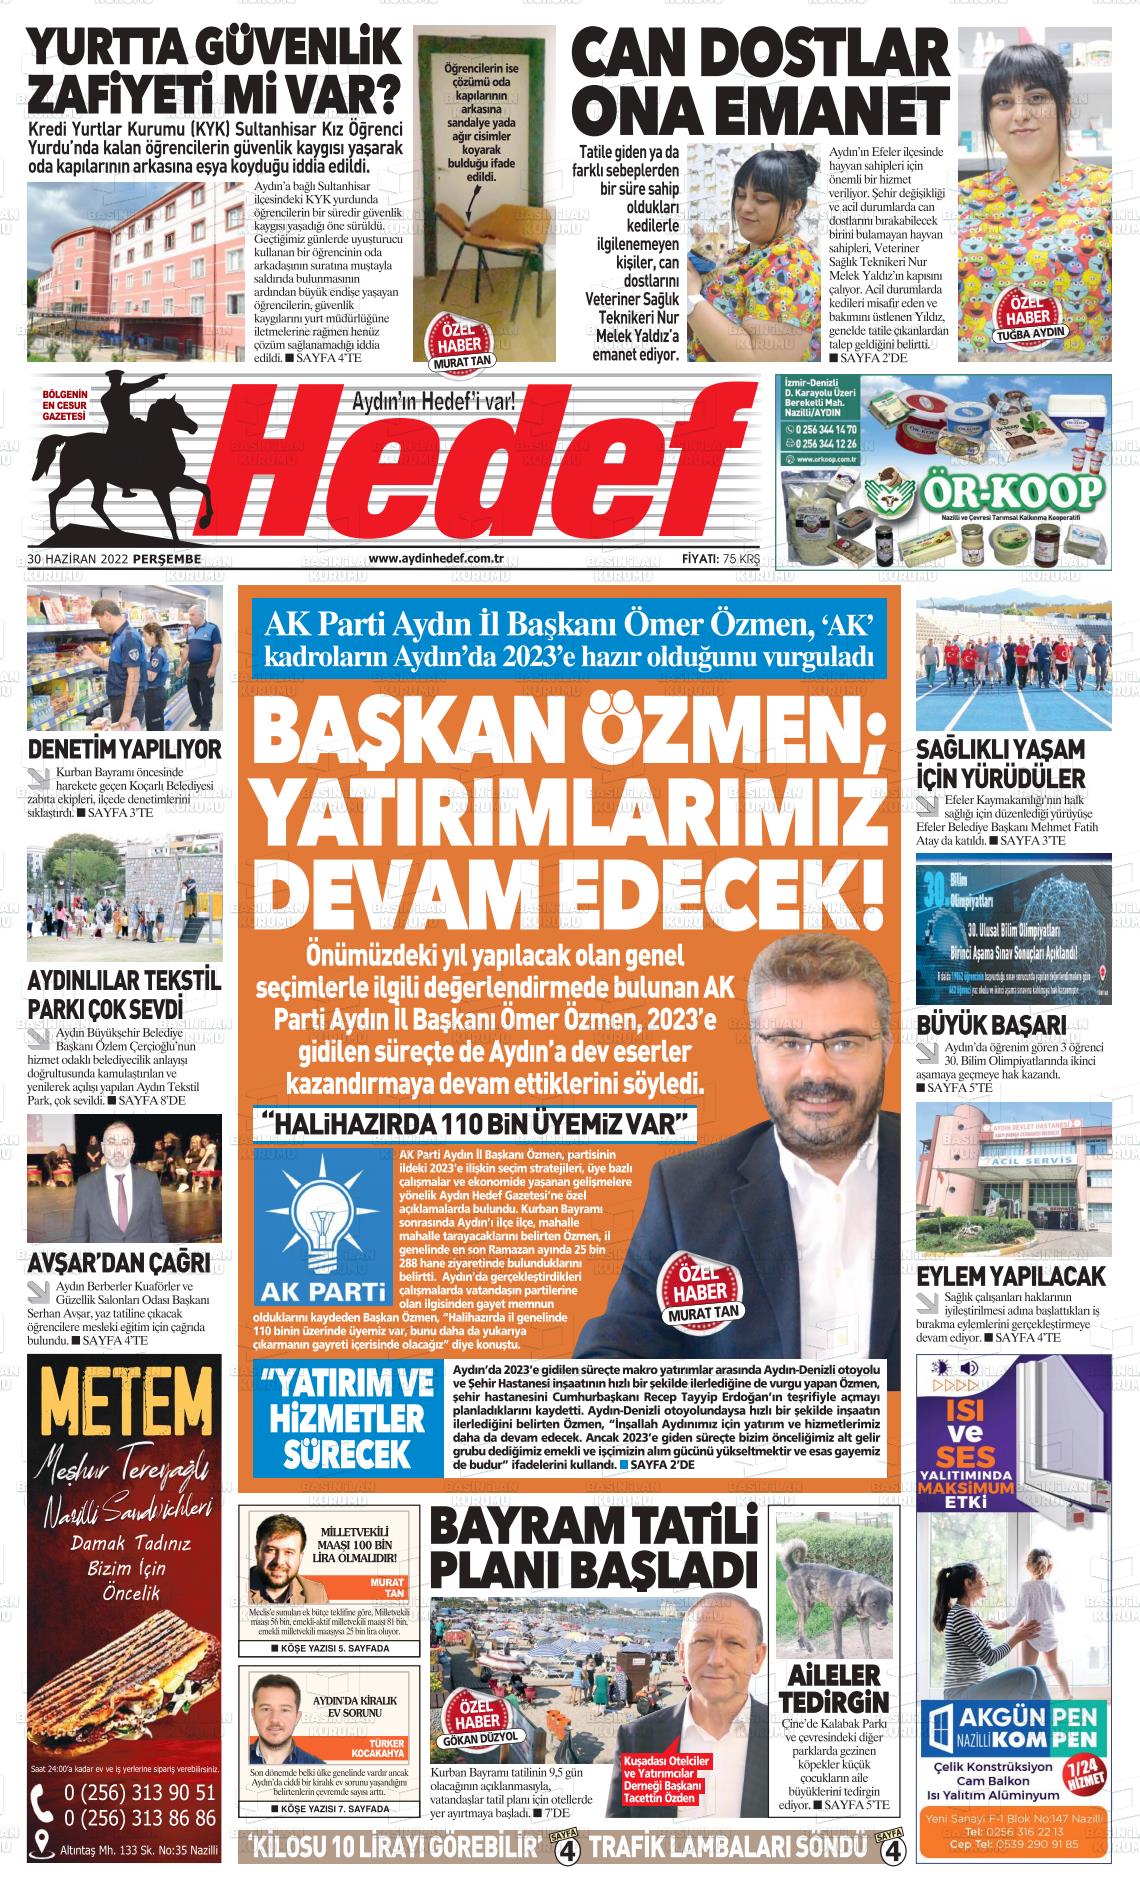 02 Temmuz 2022 Aydın Hedef Gazete Manşeti